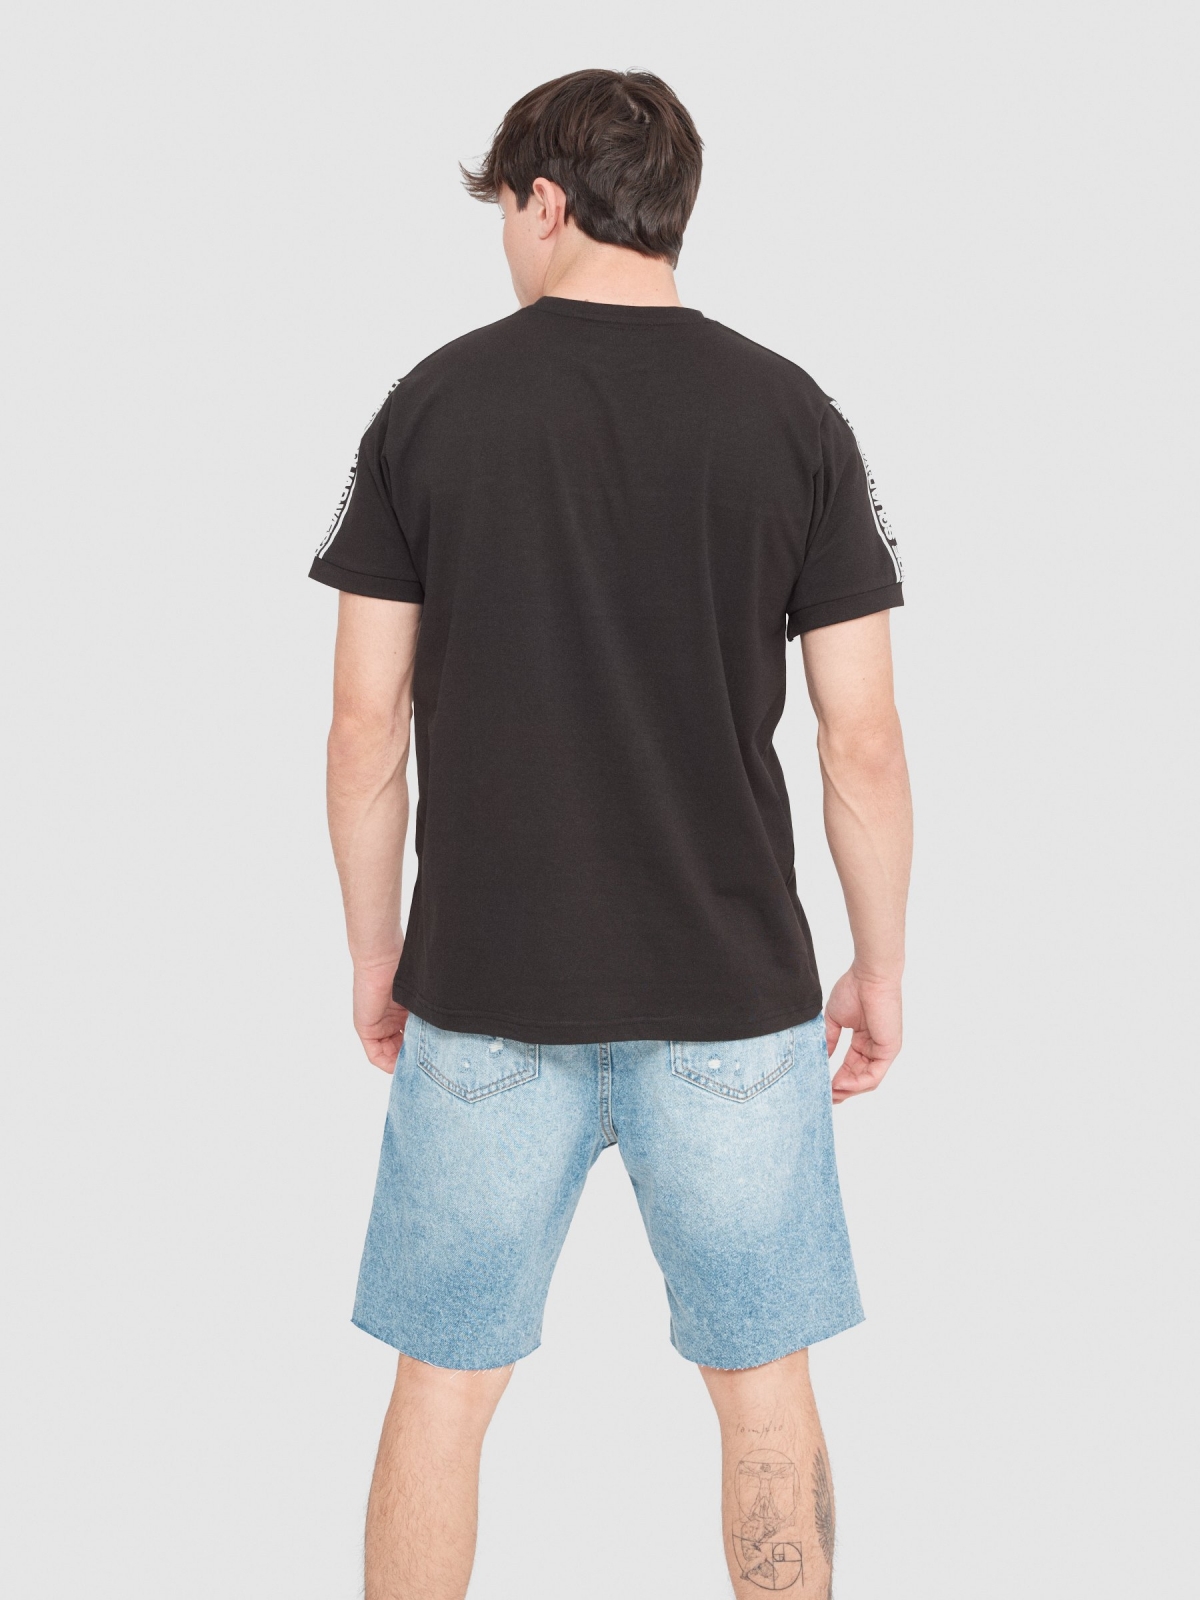 T-shirt Westside preto vista meia traseira